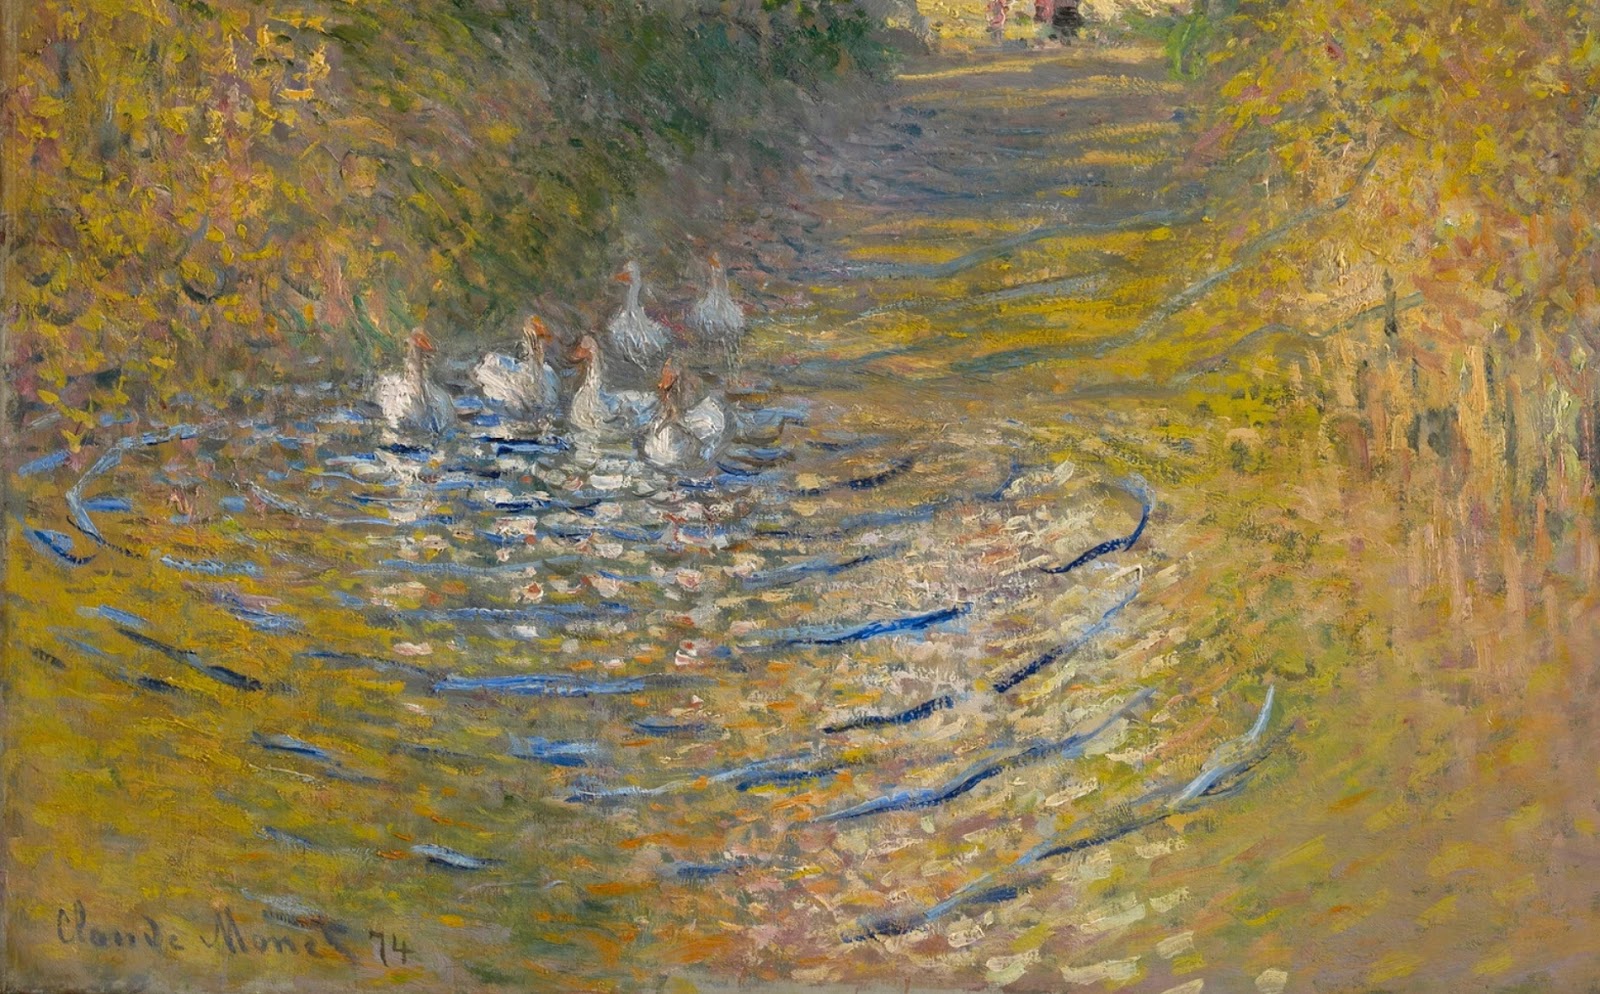 Claude+Monet-1840-1926 (1076).jpg